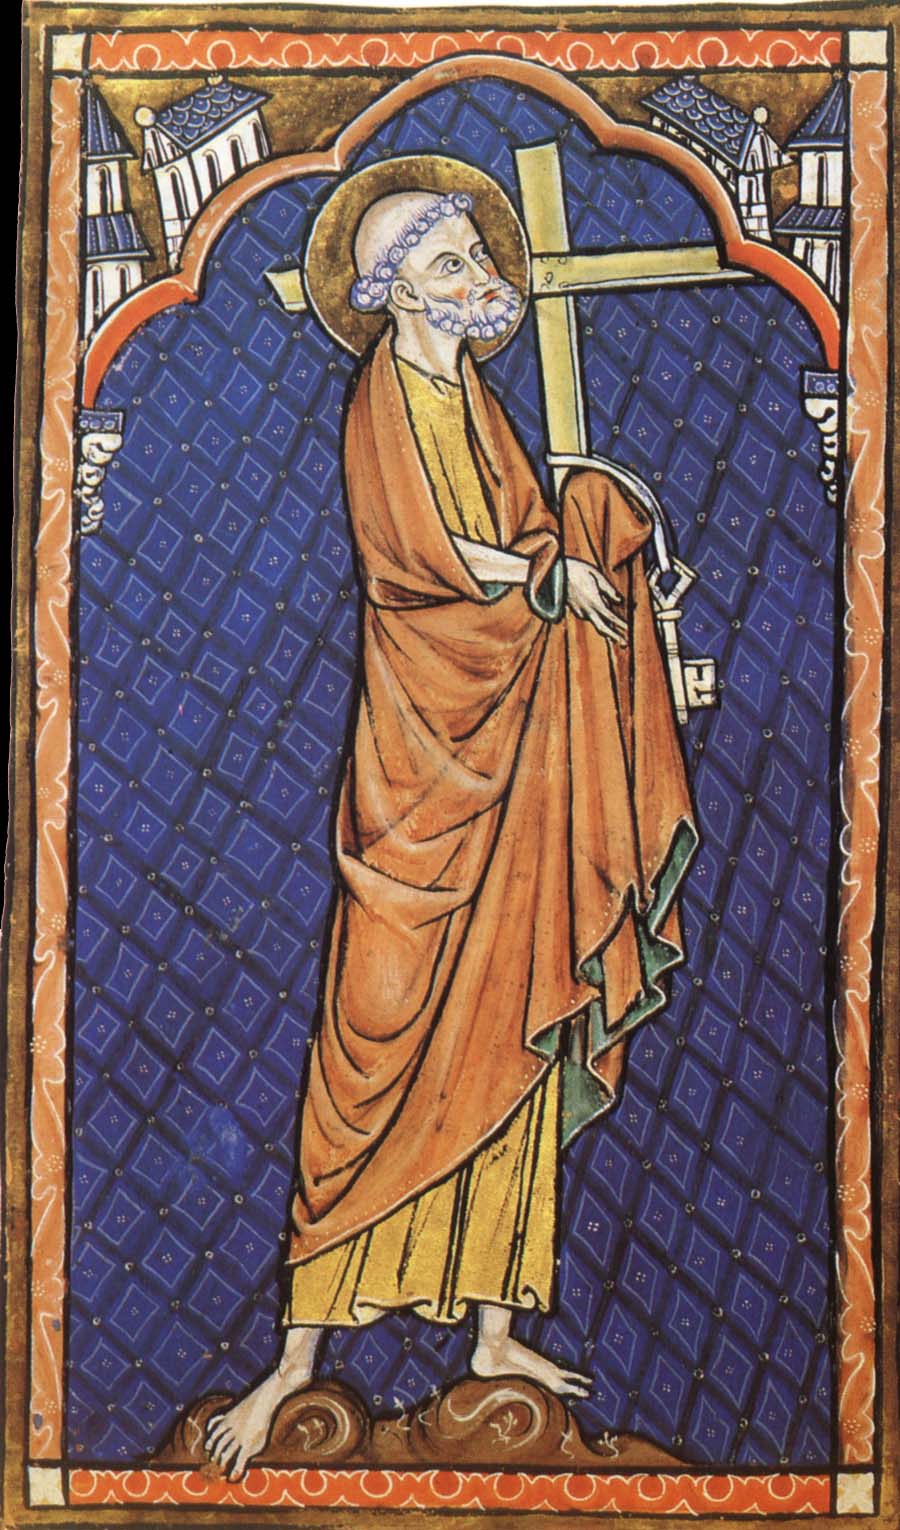 The apostle Peter, from Oscottpsaltaren